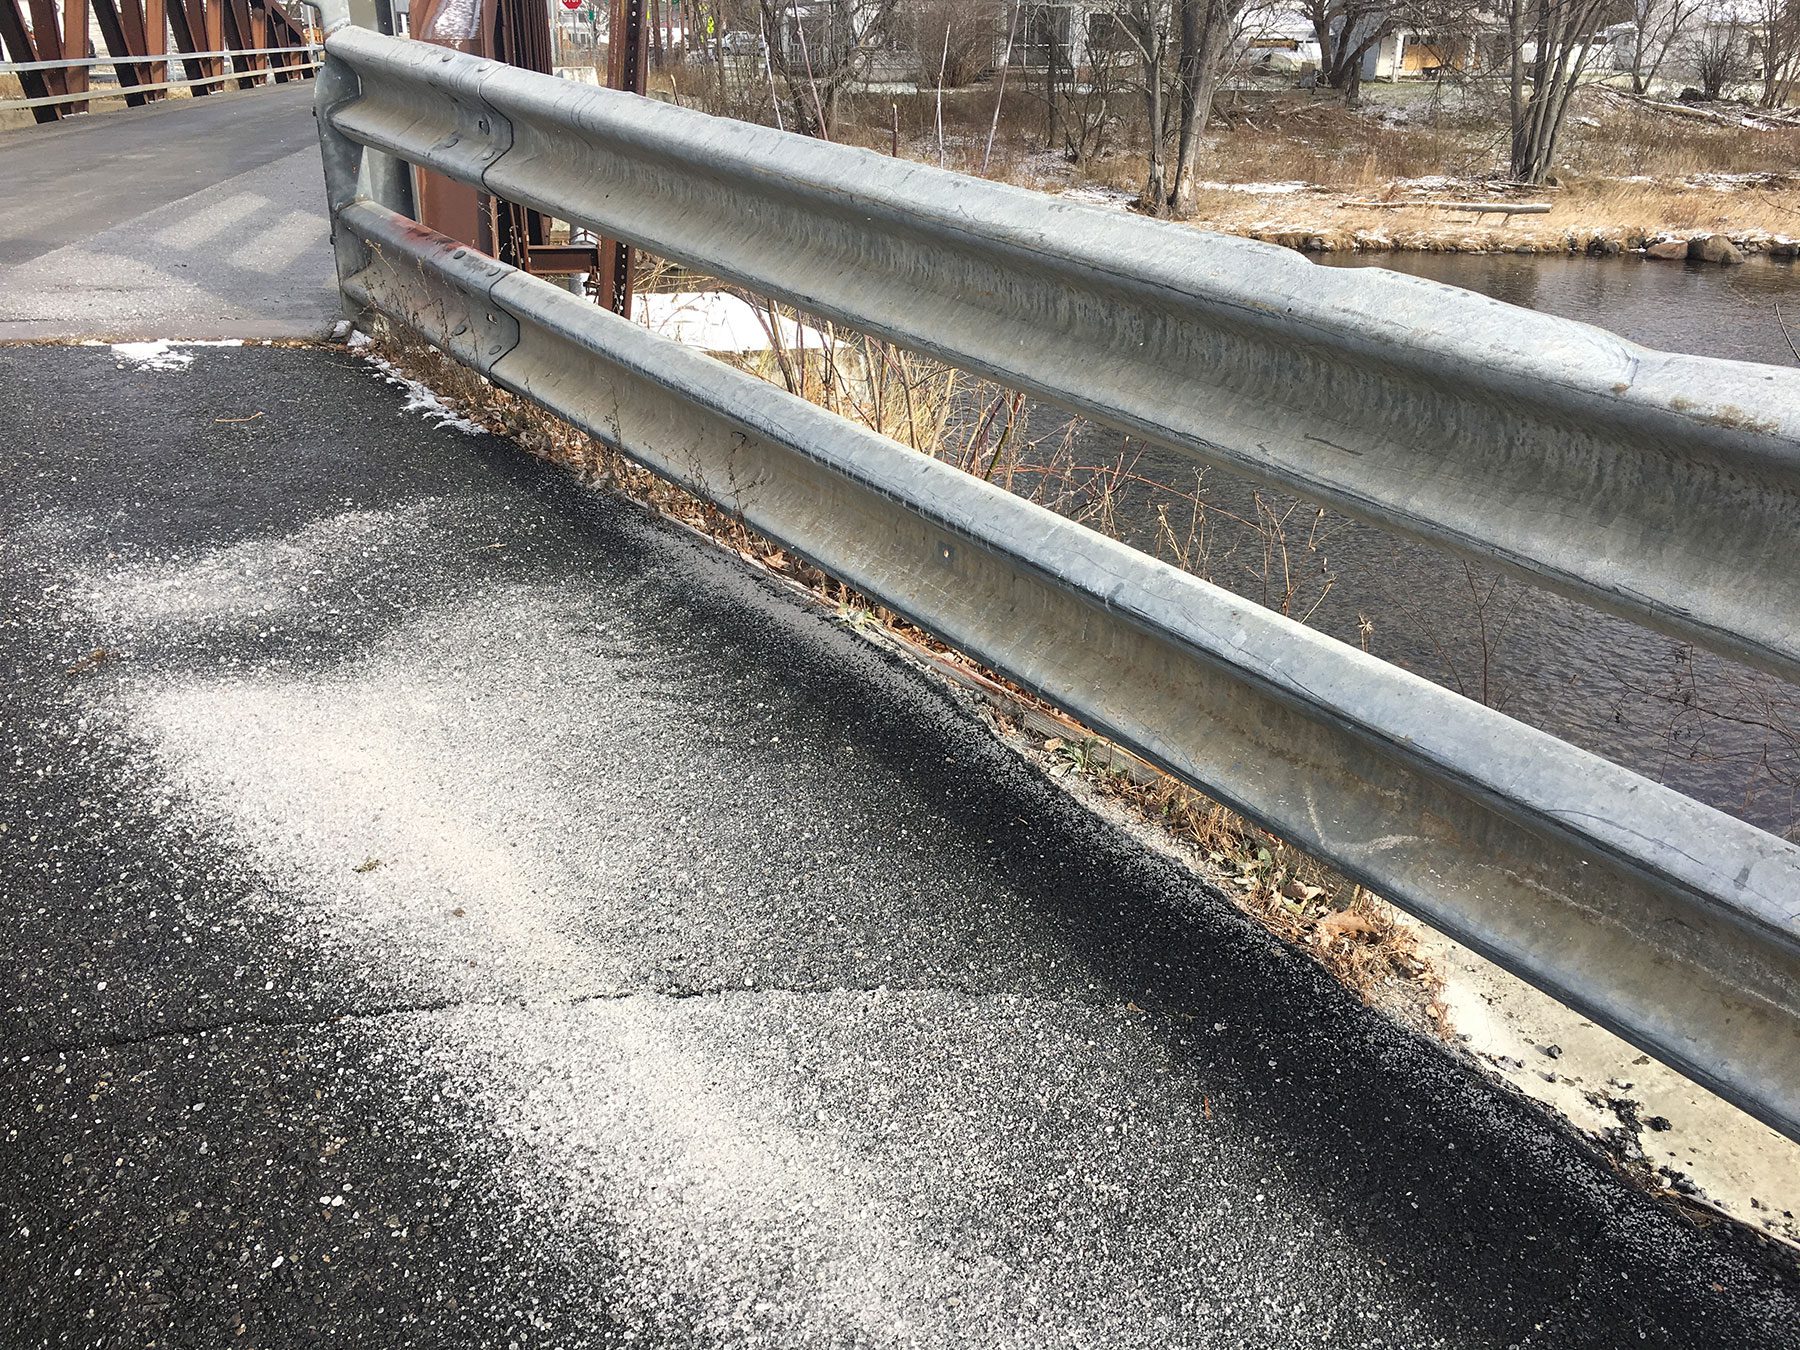 Road salt on a bridge